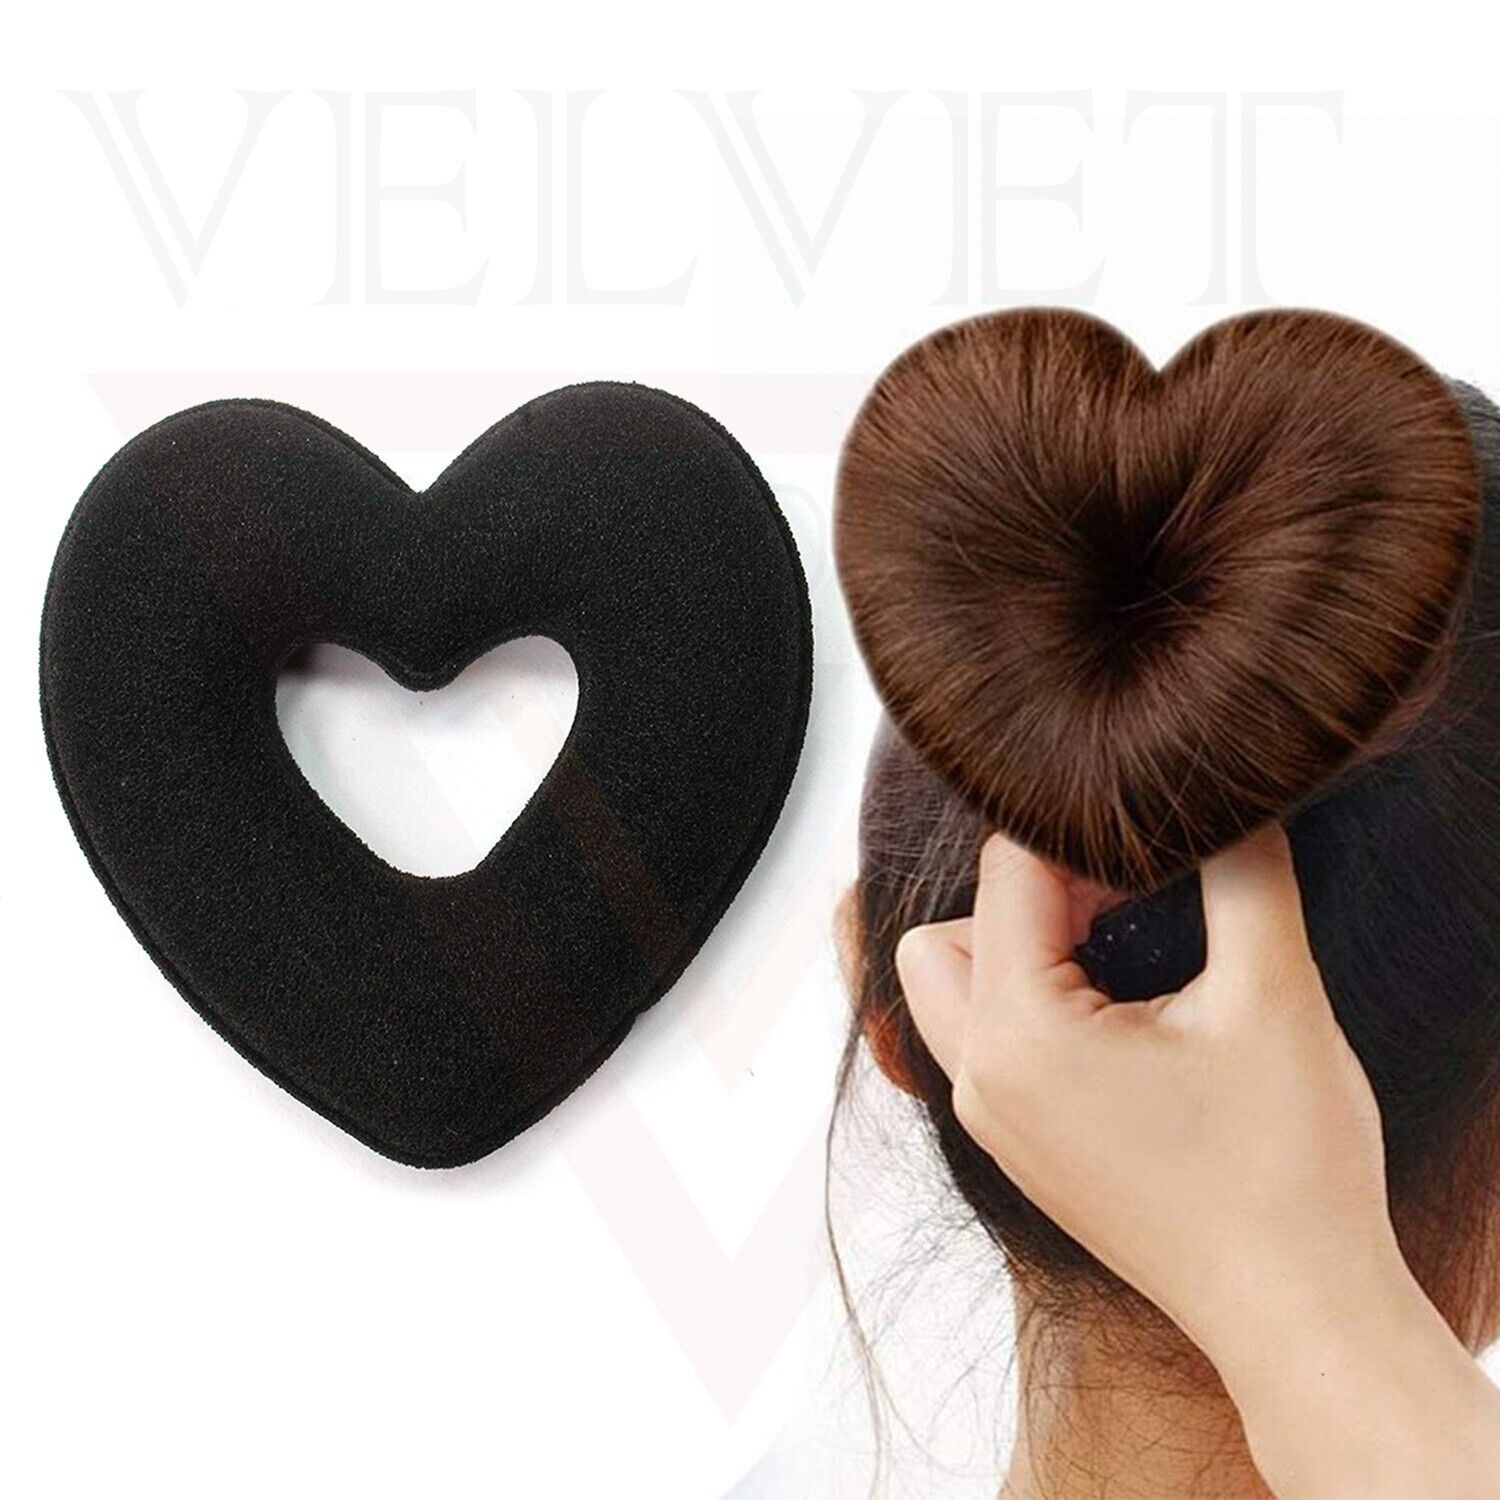 Heart Shaped Hair Bun Makers Magic Sponge Donut Hair Accessories Styling  Tools | eBay